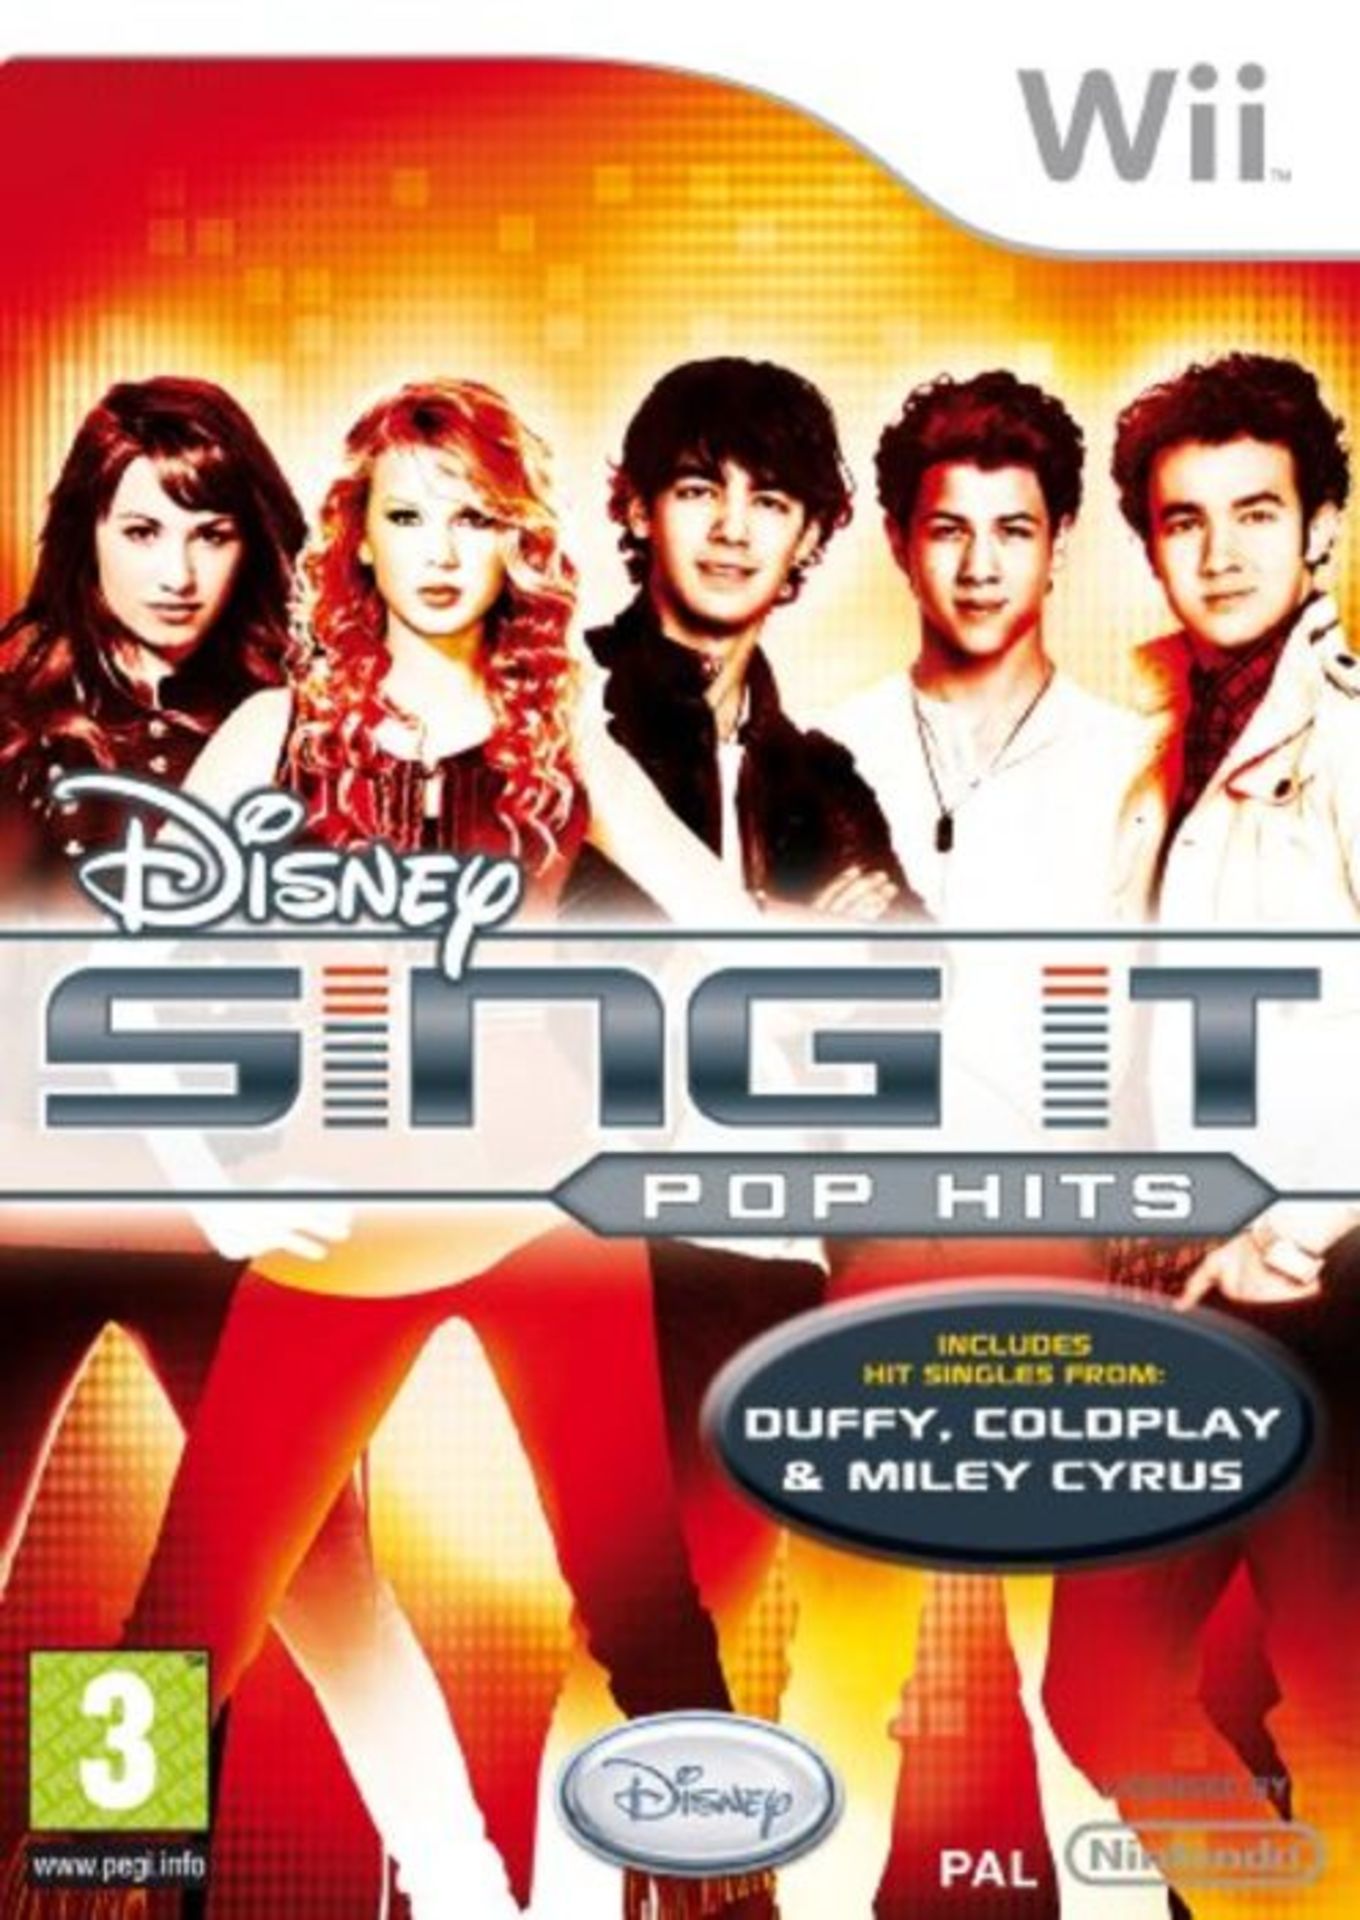 Disney Sing It: Pop Hits (Wii) - Image 4 of 6